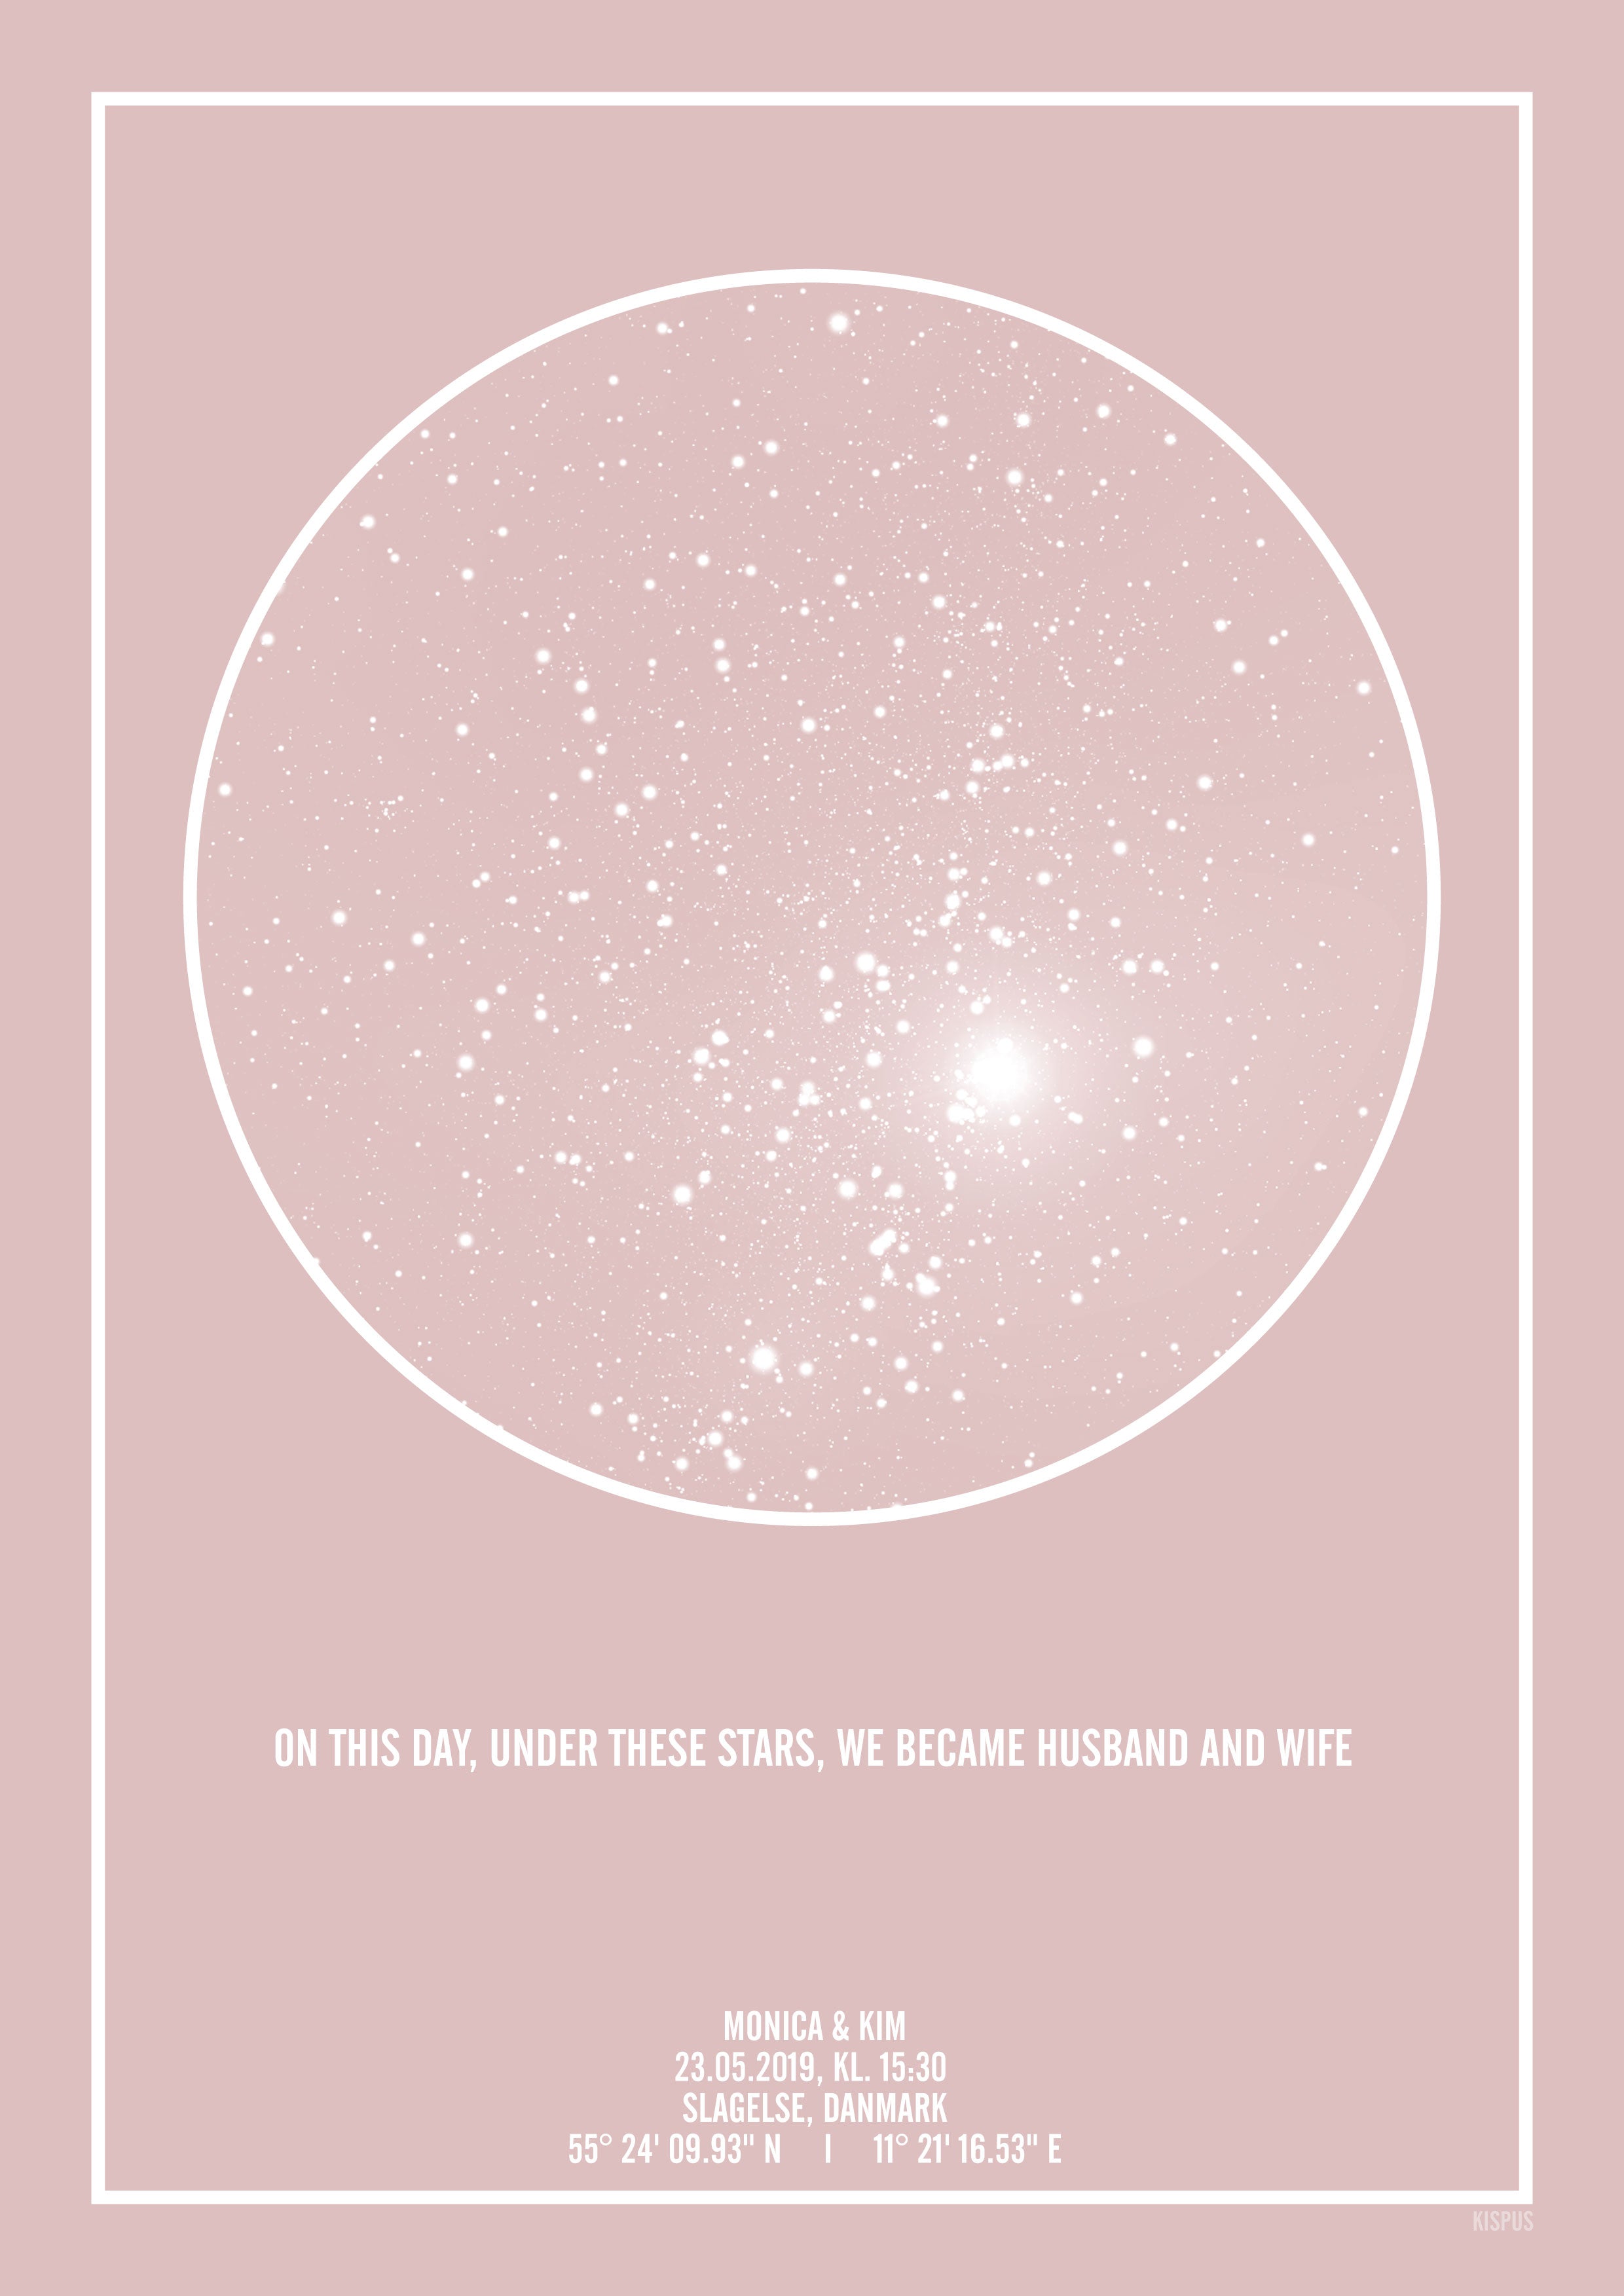 Se PERSONLIG STJERNEHIMMEL PLAKAT (LYSERØD) - 30x40 / Hvid tekst og lyserød stjernehimmel / Klar stjernehimmel hos KISPUS